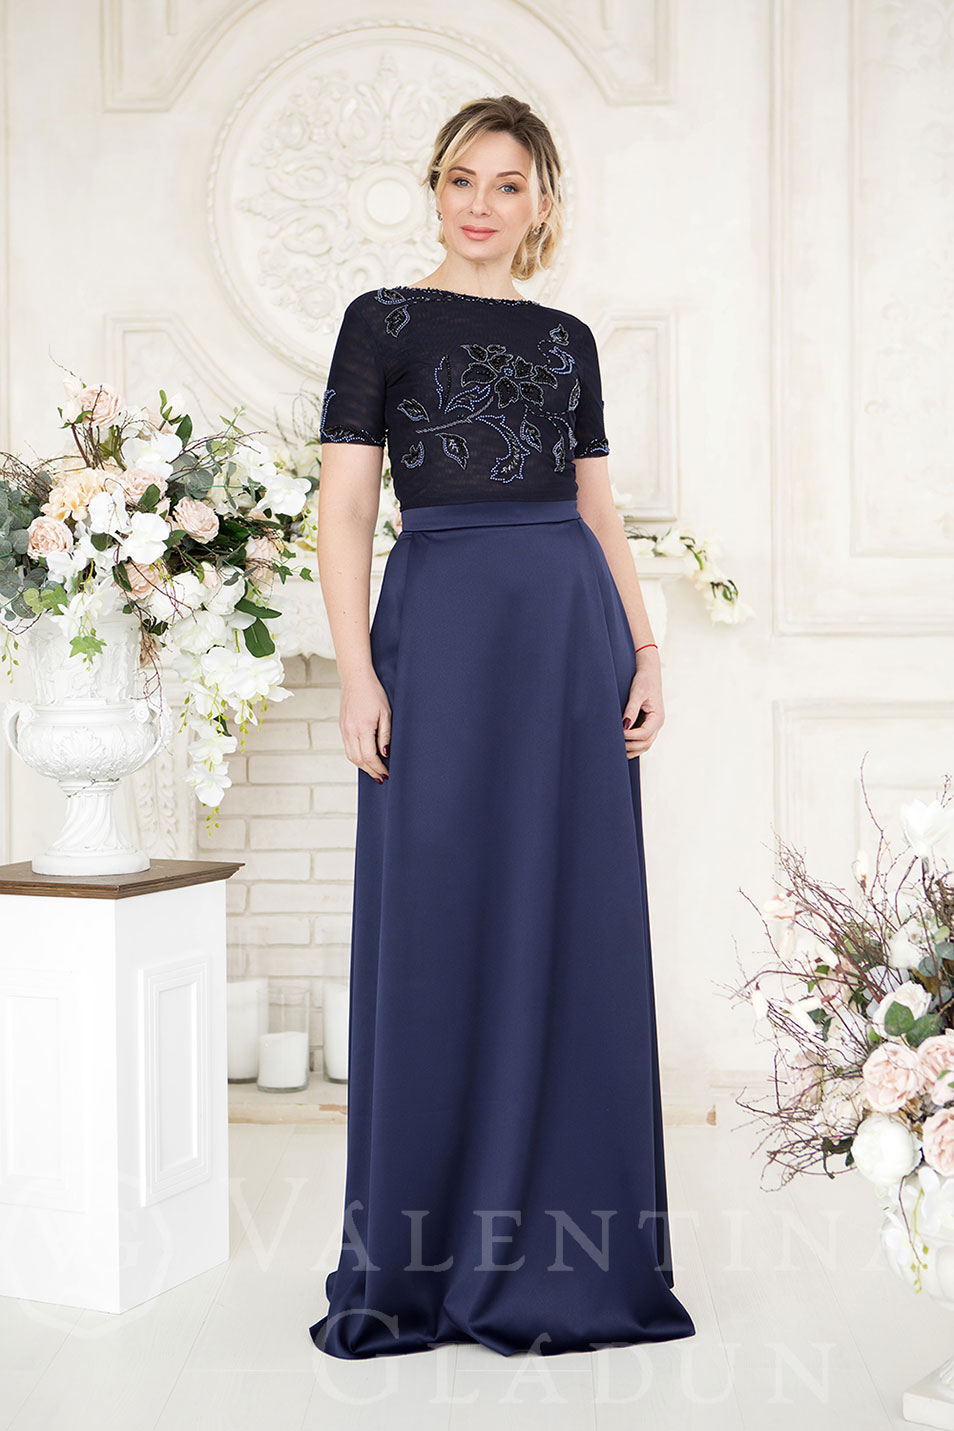 Элегантное платье на корпоратив Branda dark blue